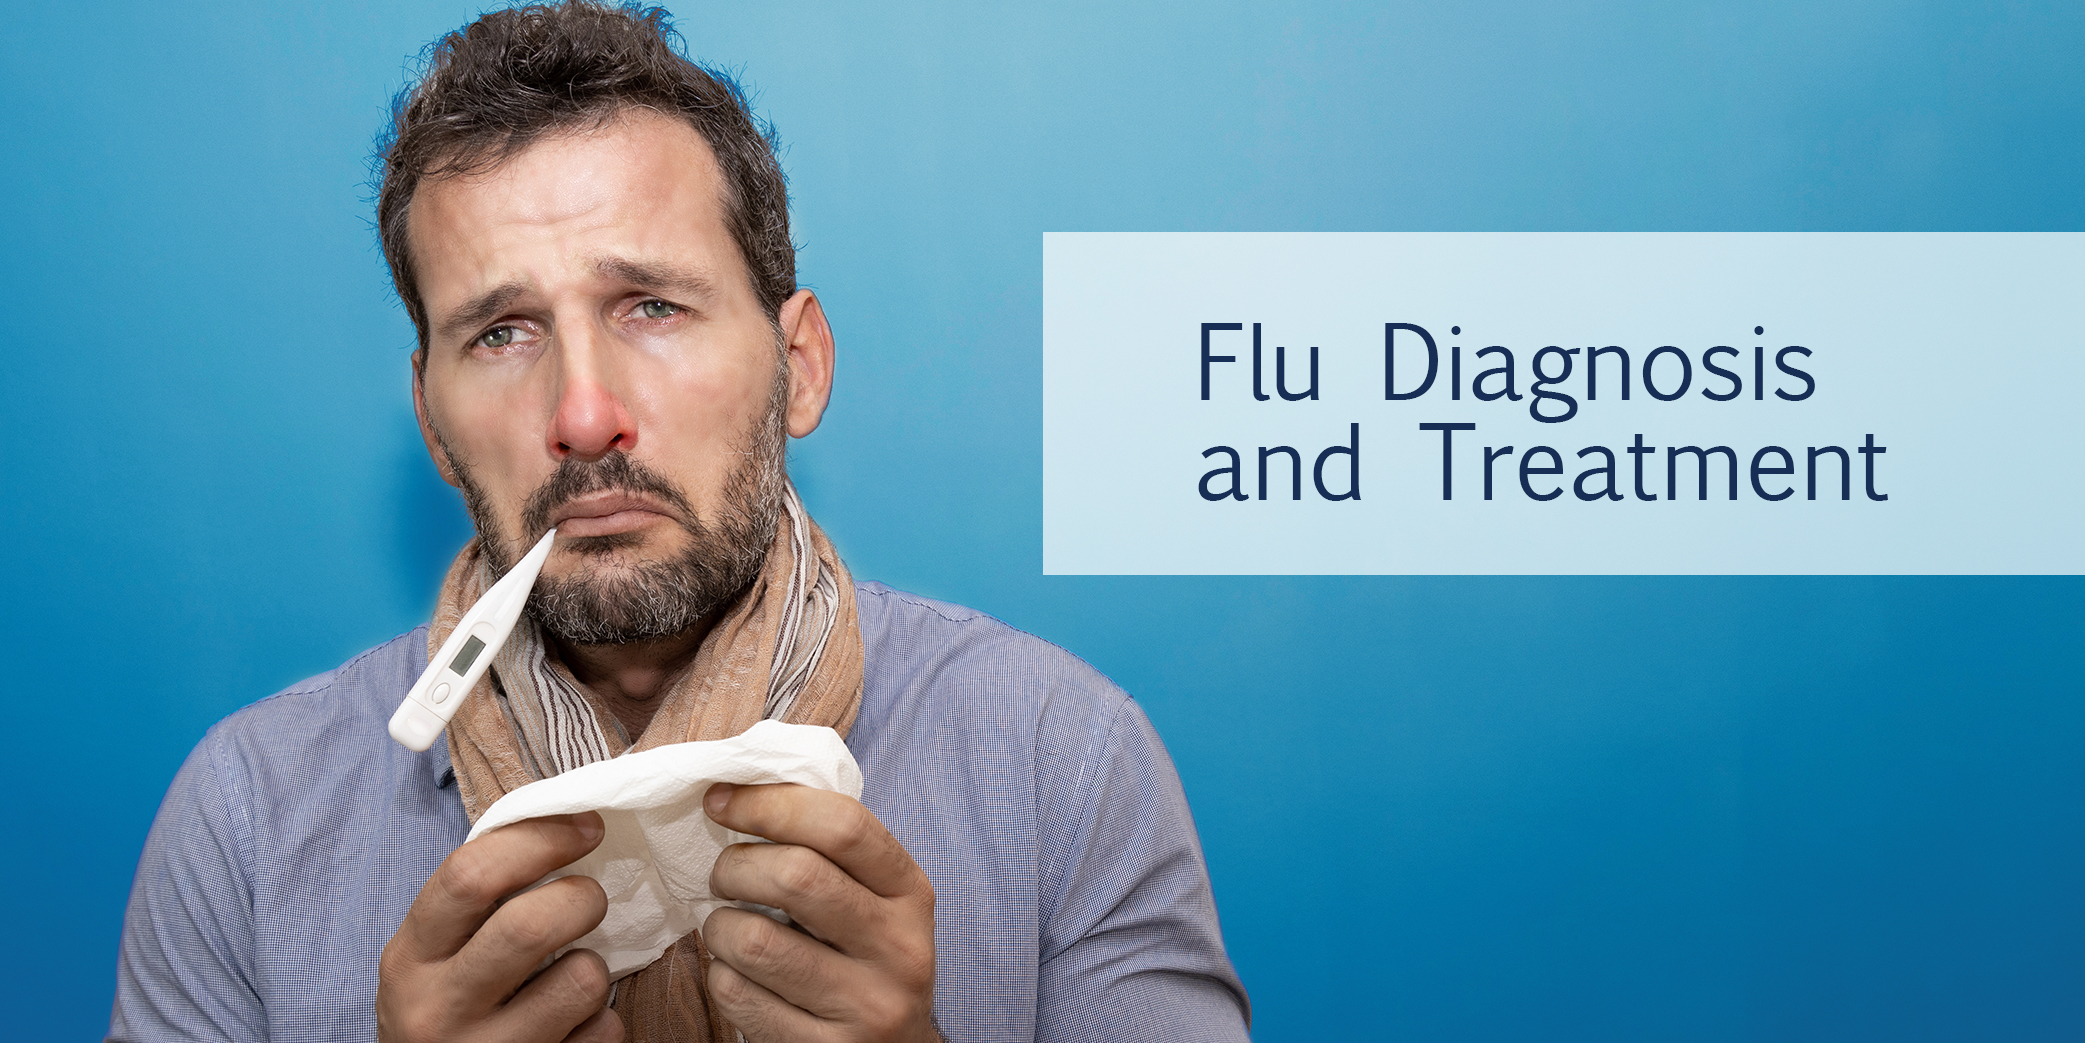 Flu Diagnosis and Treatment